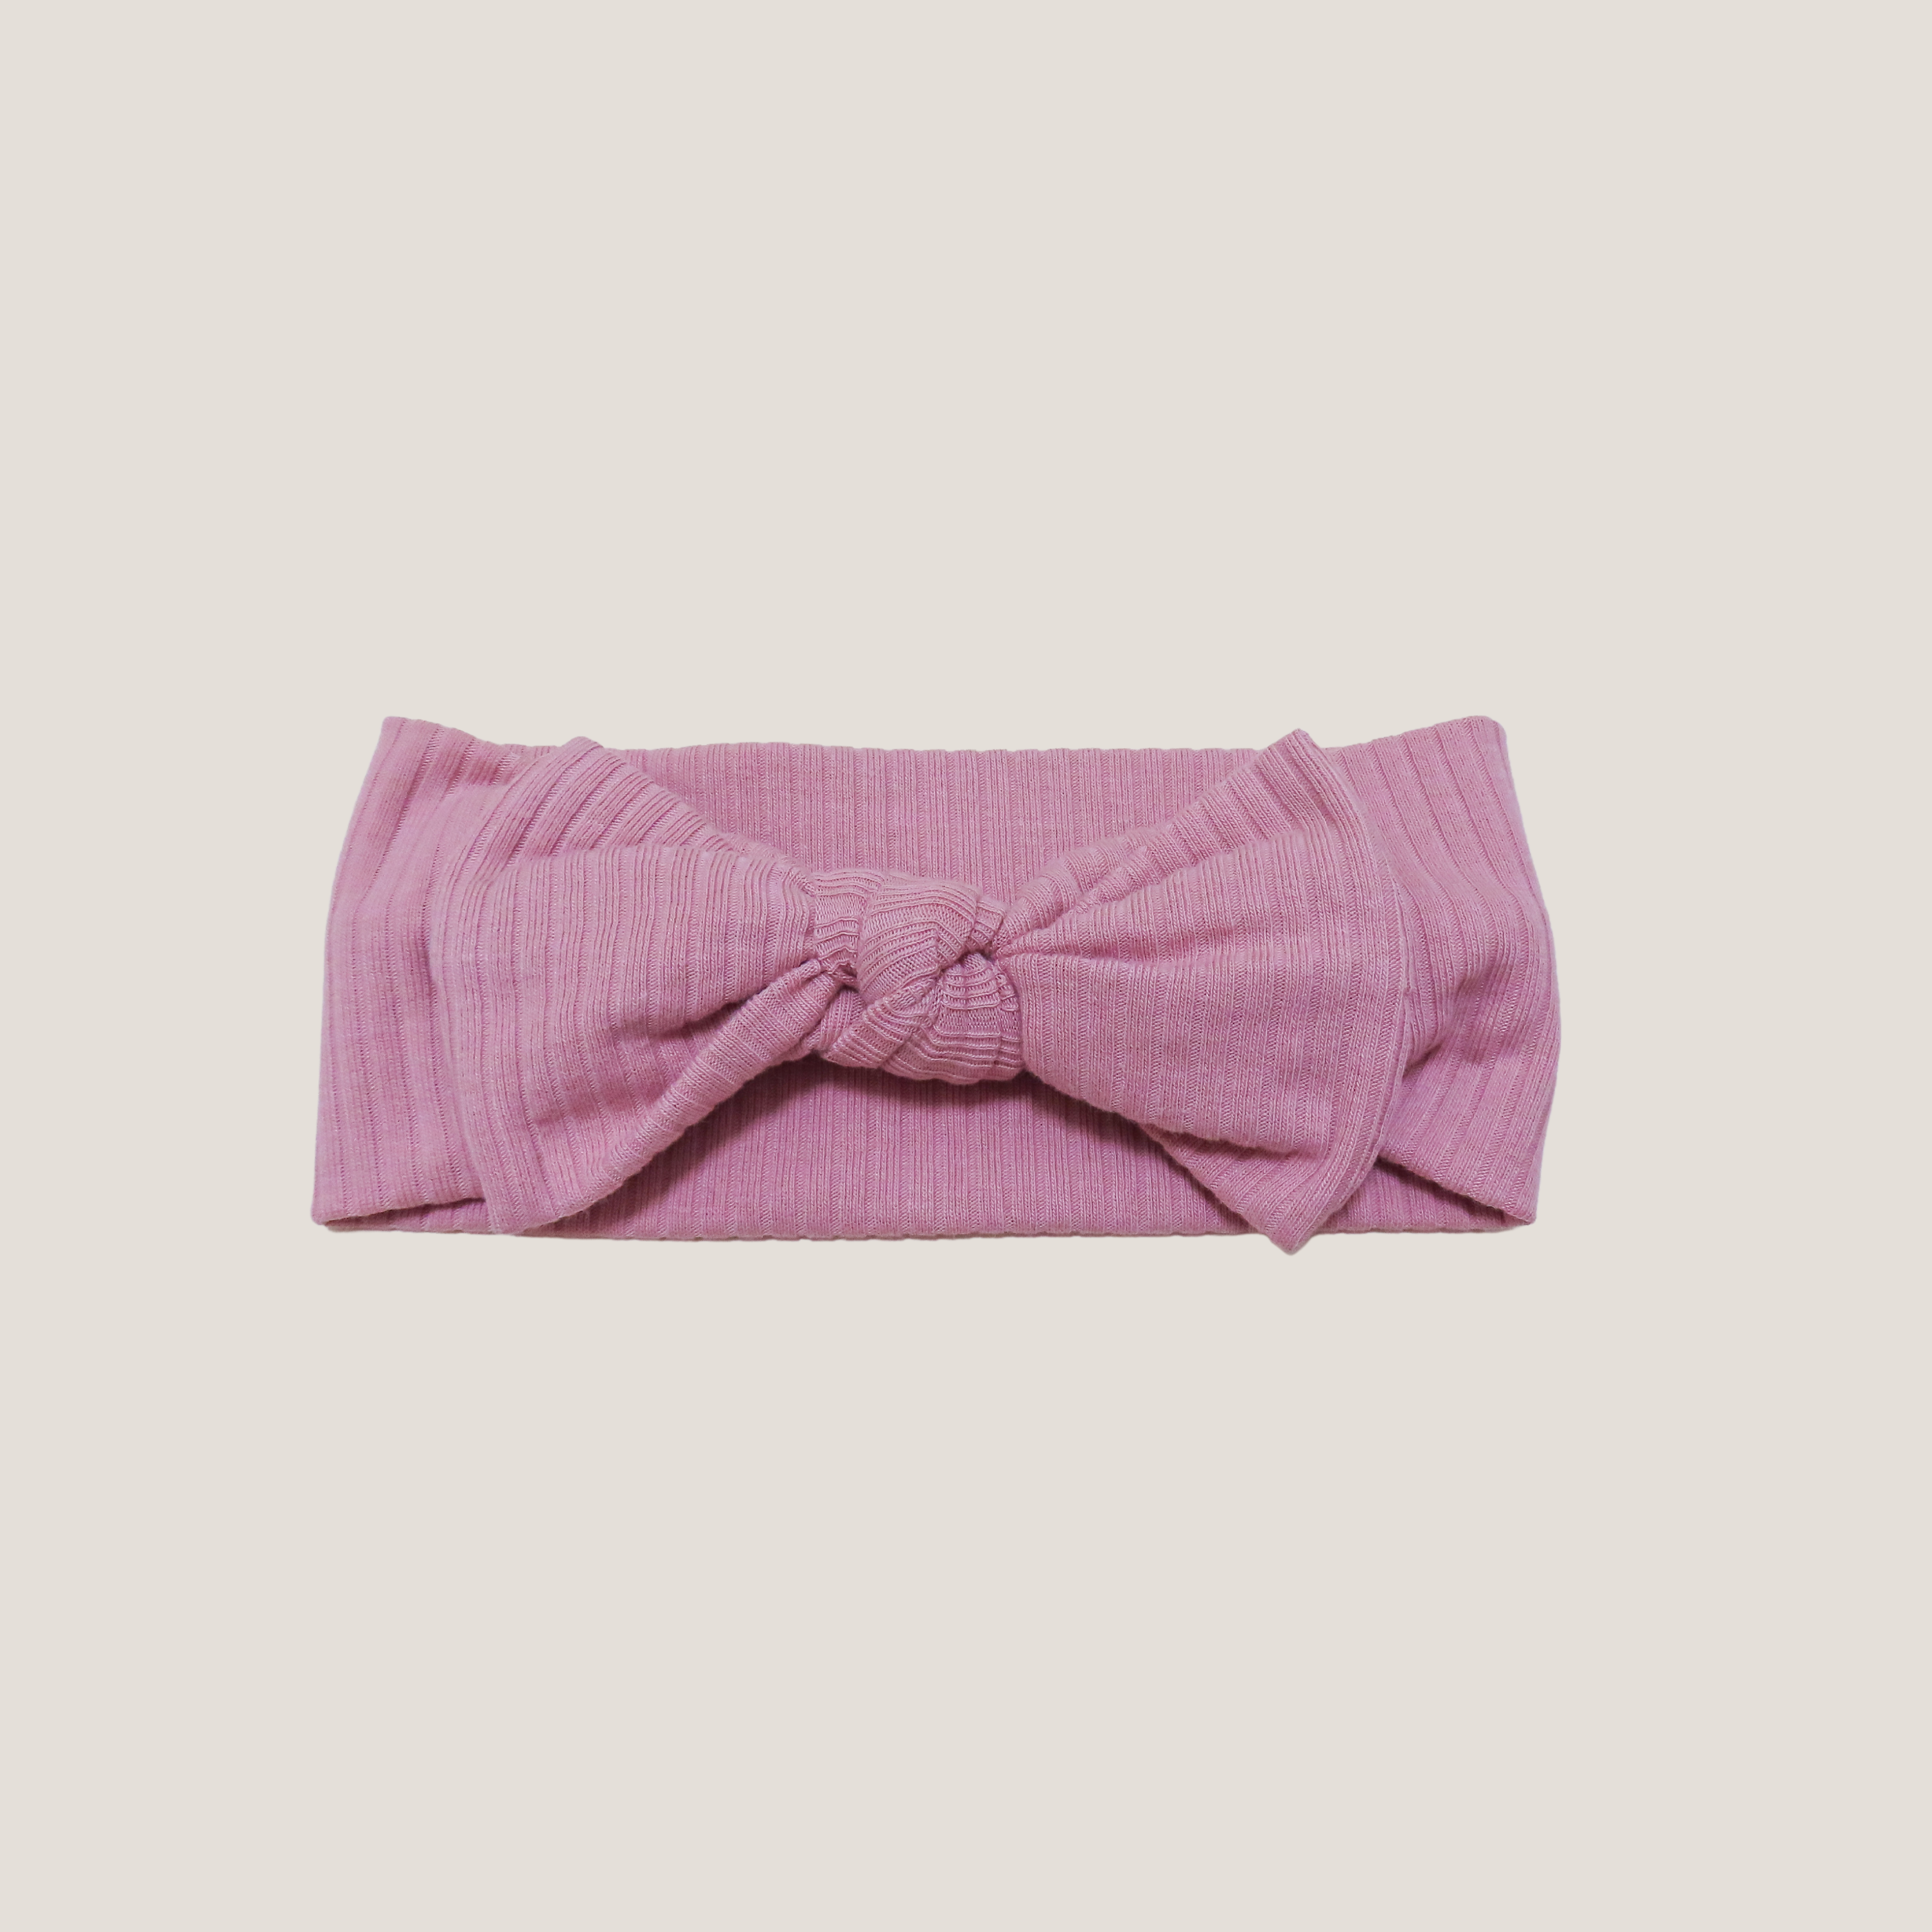 Ribbed Baby Bow Headband in Dusty Pink